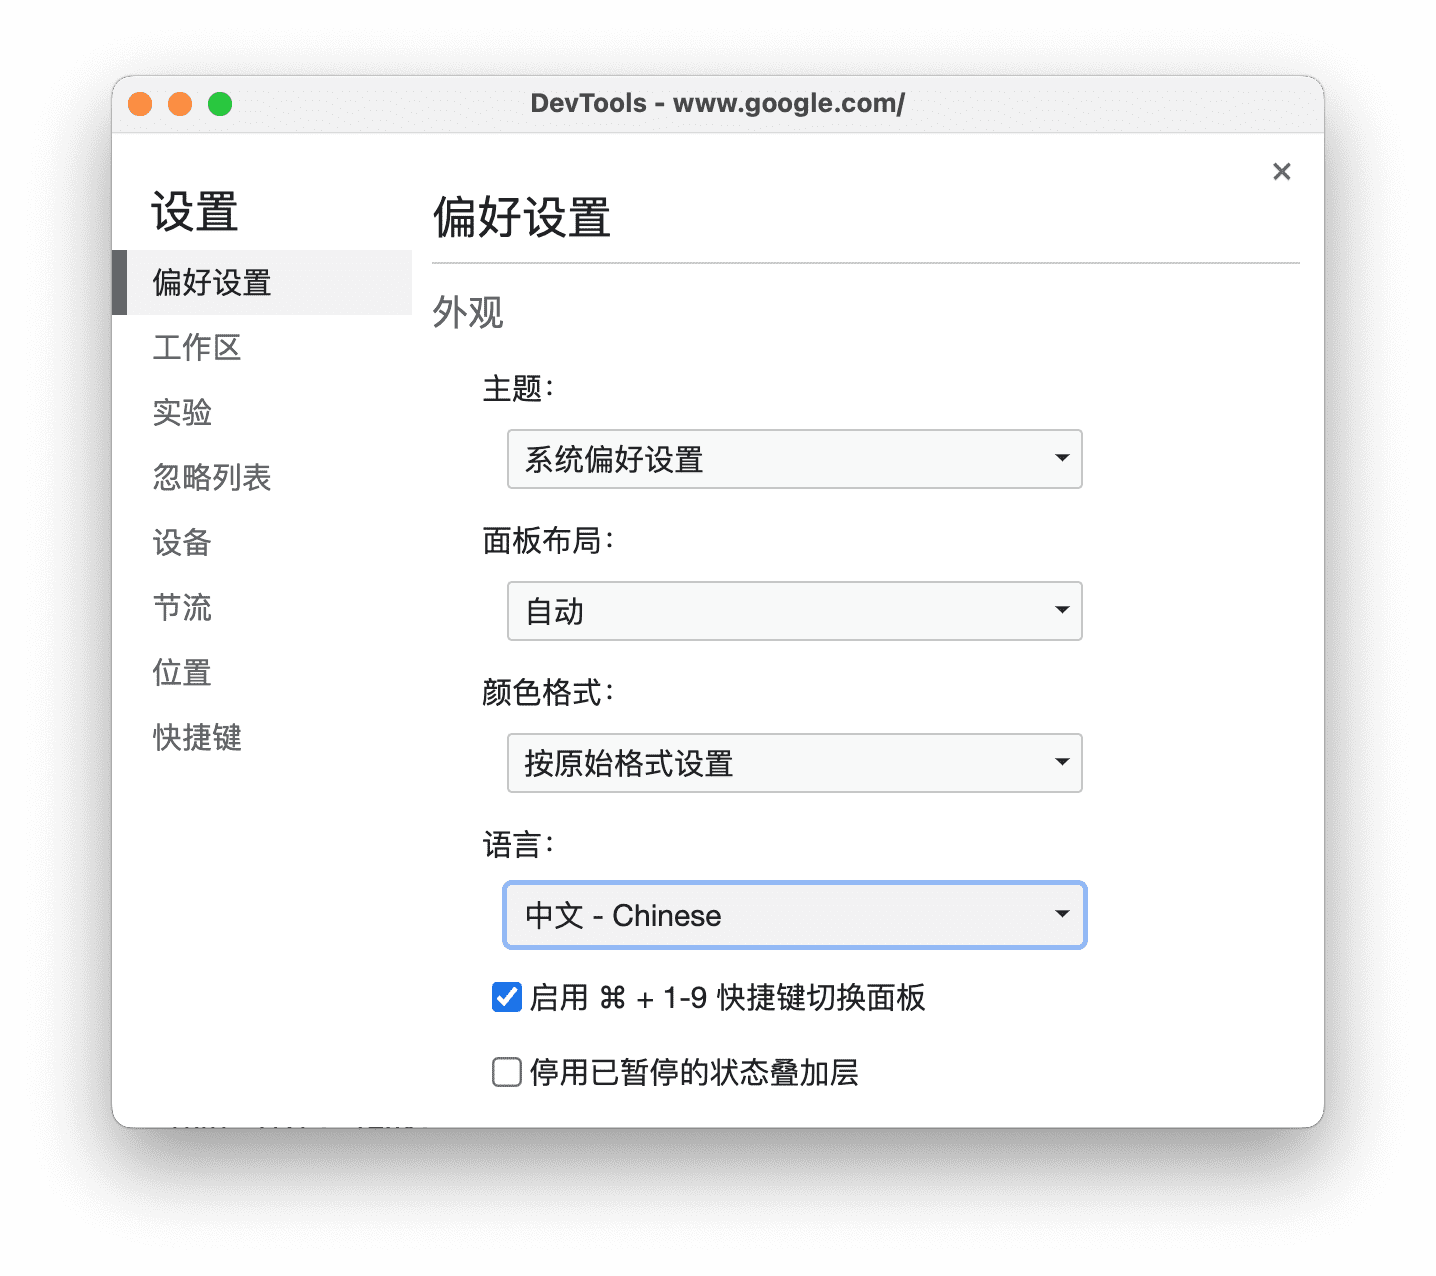 Panel de configuración en chino